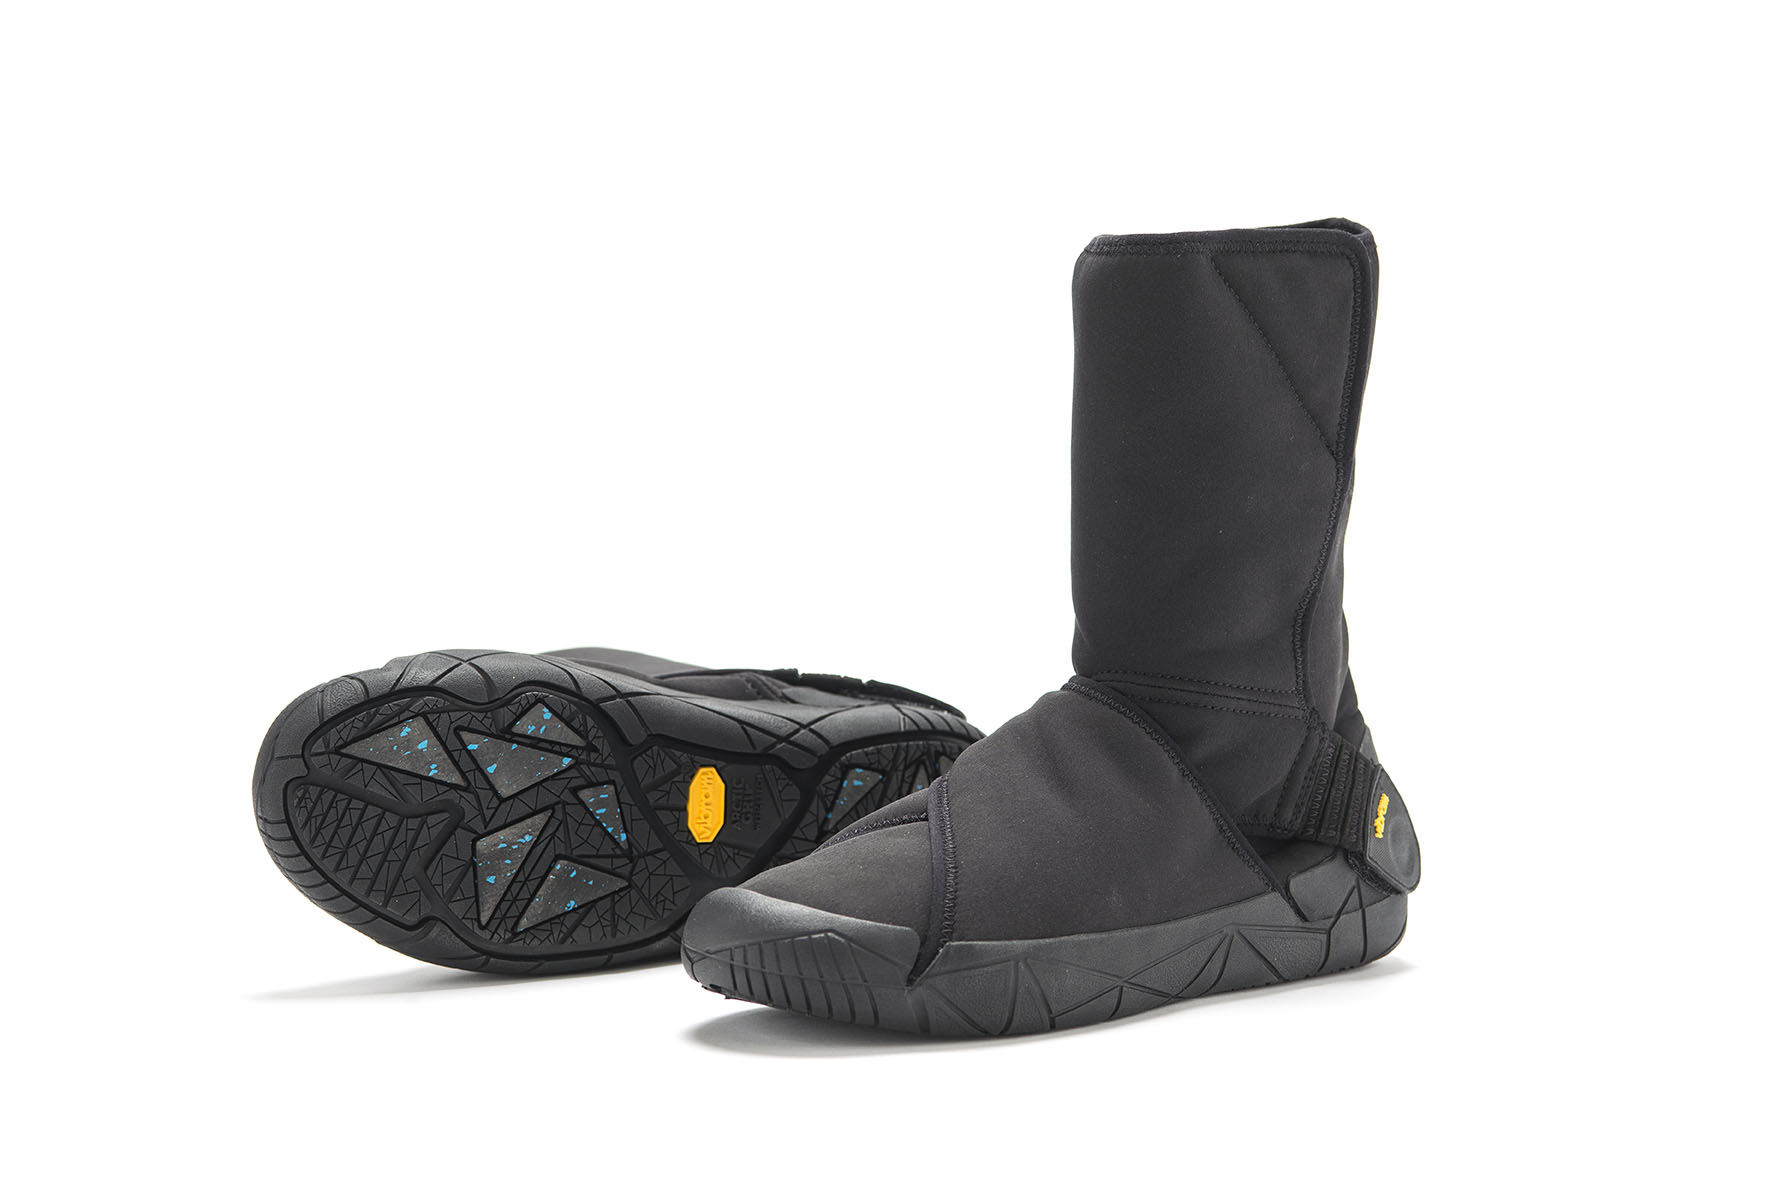 women's boots with vibram arctic grip soles